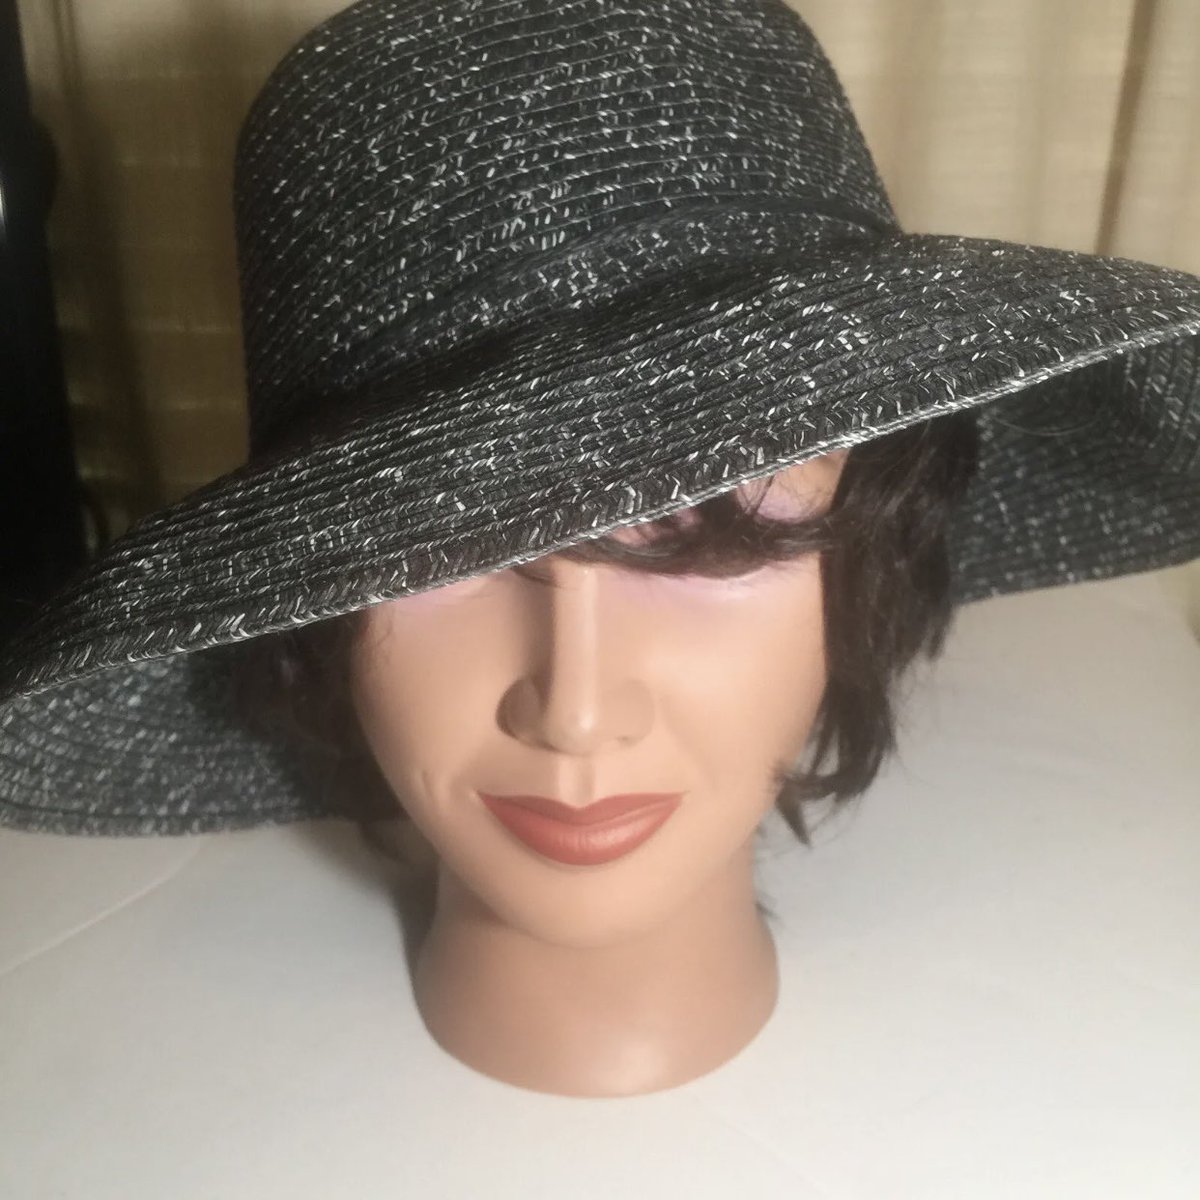 Check out Ladies Hat Black Tweed Look Floppy Sun Church Derby  ebay.com/itm/2855515309… #eBay via @eBay #churchhat #ladiesblackhat